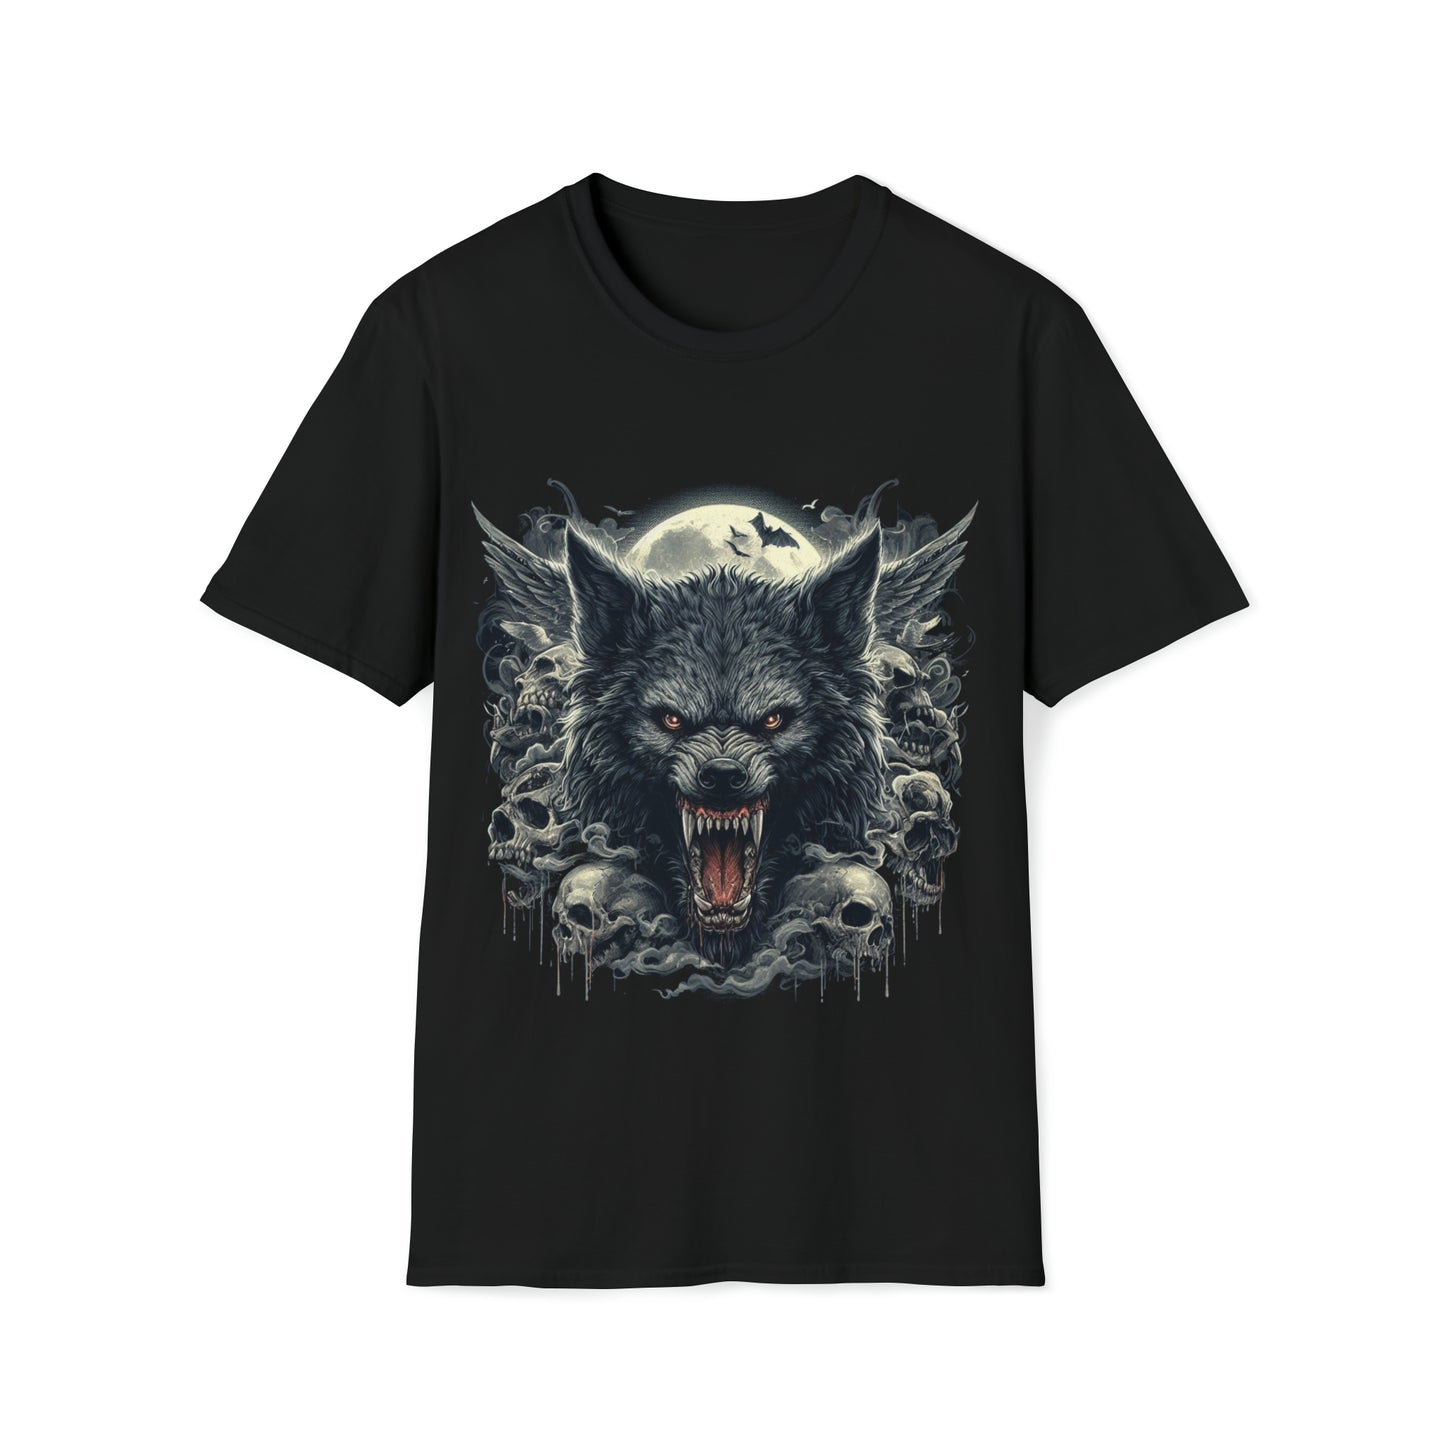 Werewolf Shirt - Unleash the Beast Within